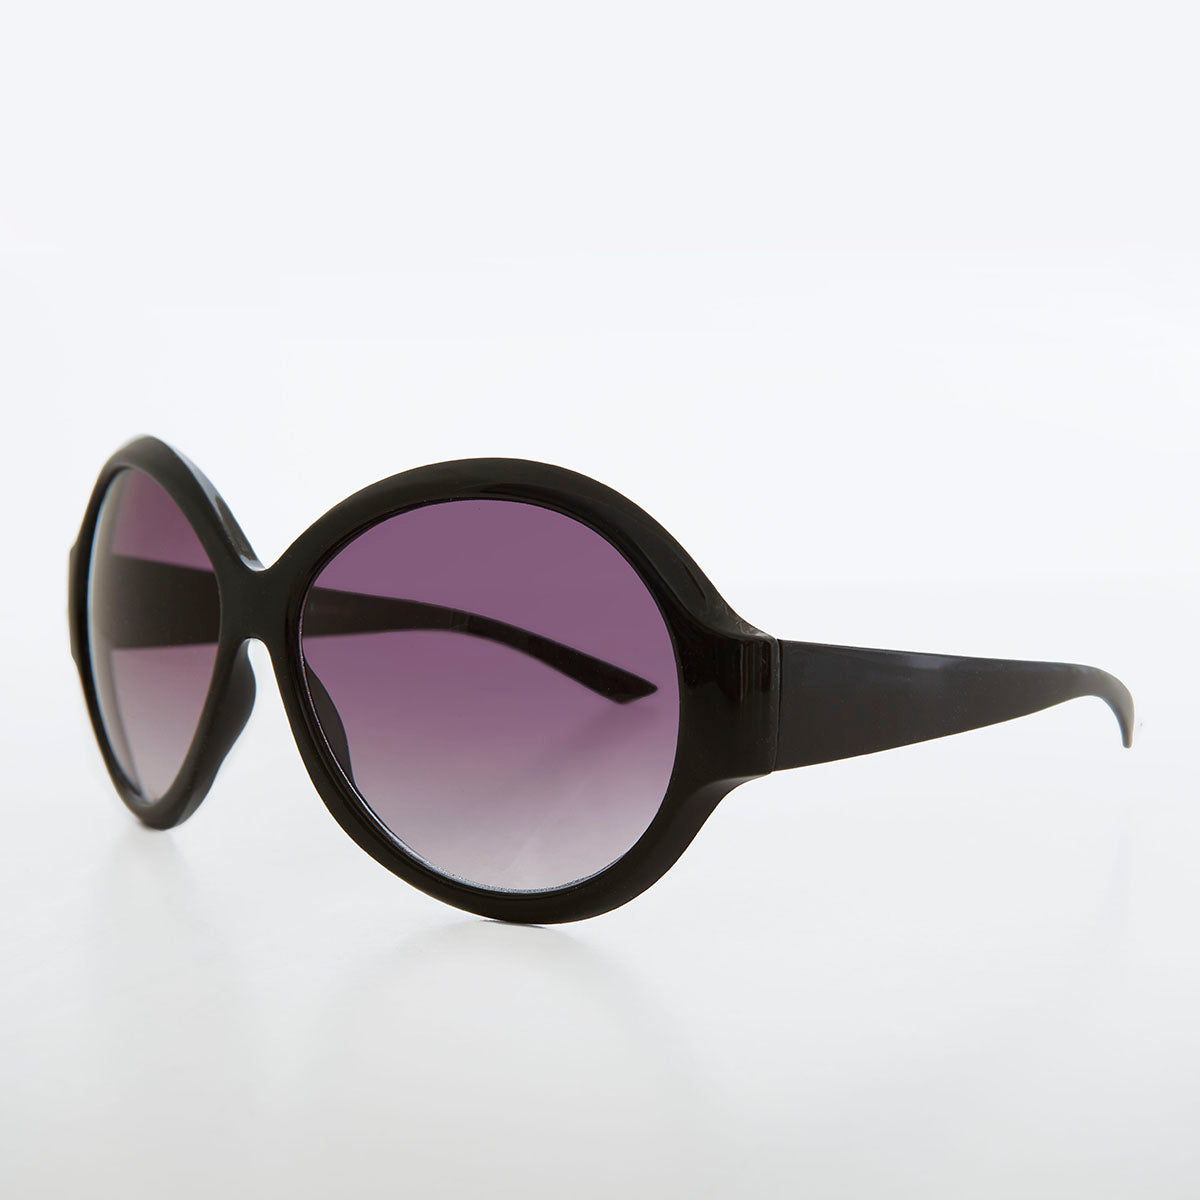 round oversized black women's sunglasses with gradient lenses